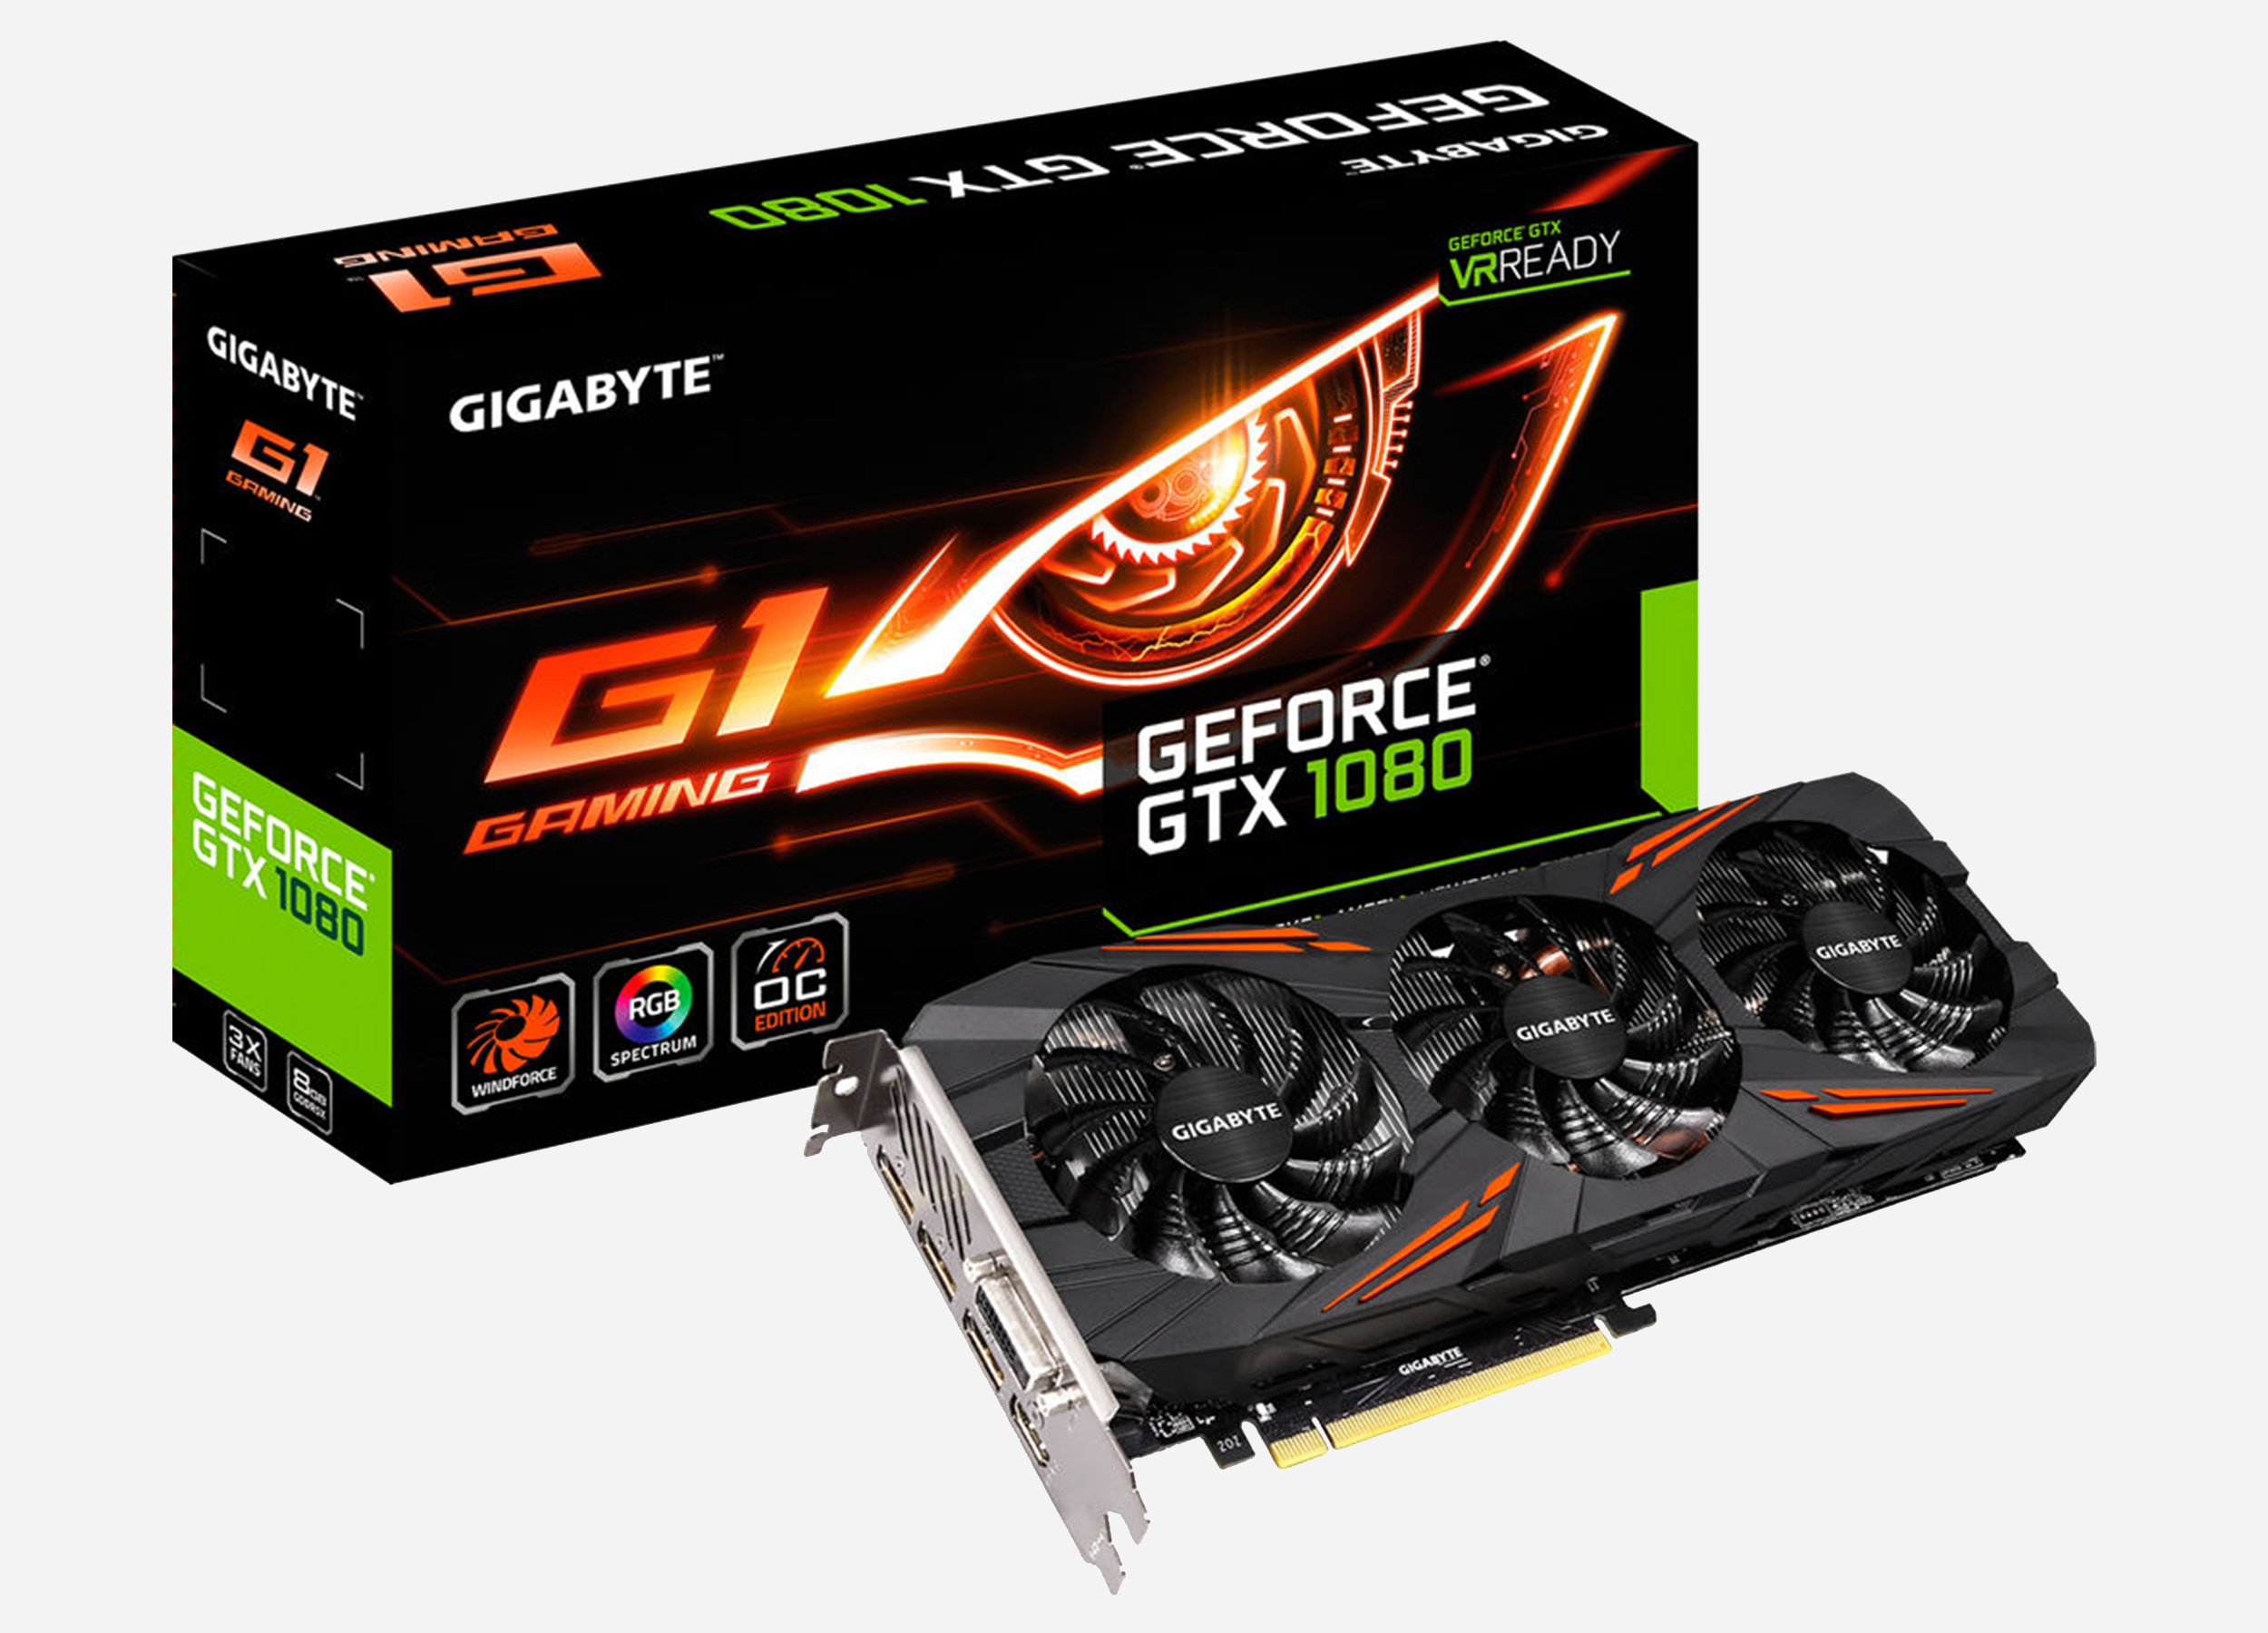 GIGABYTE GeForce GTX 1080 G1 GAMING 8G